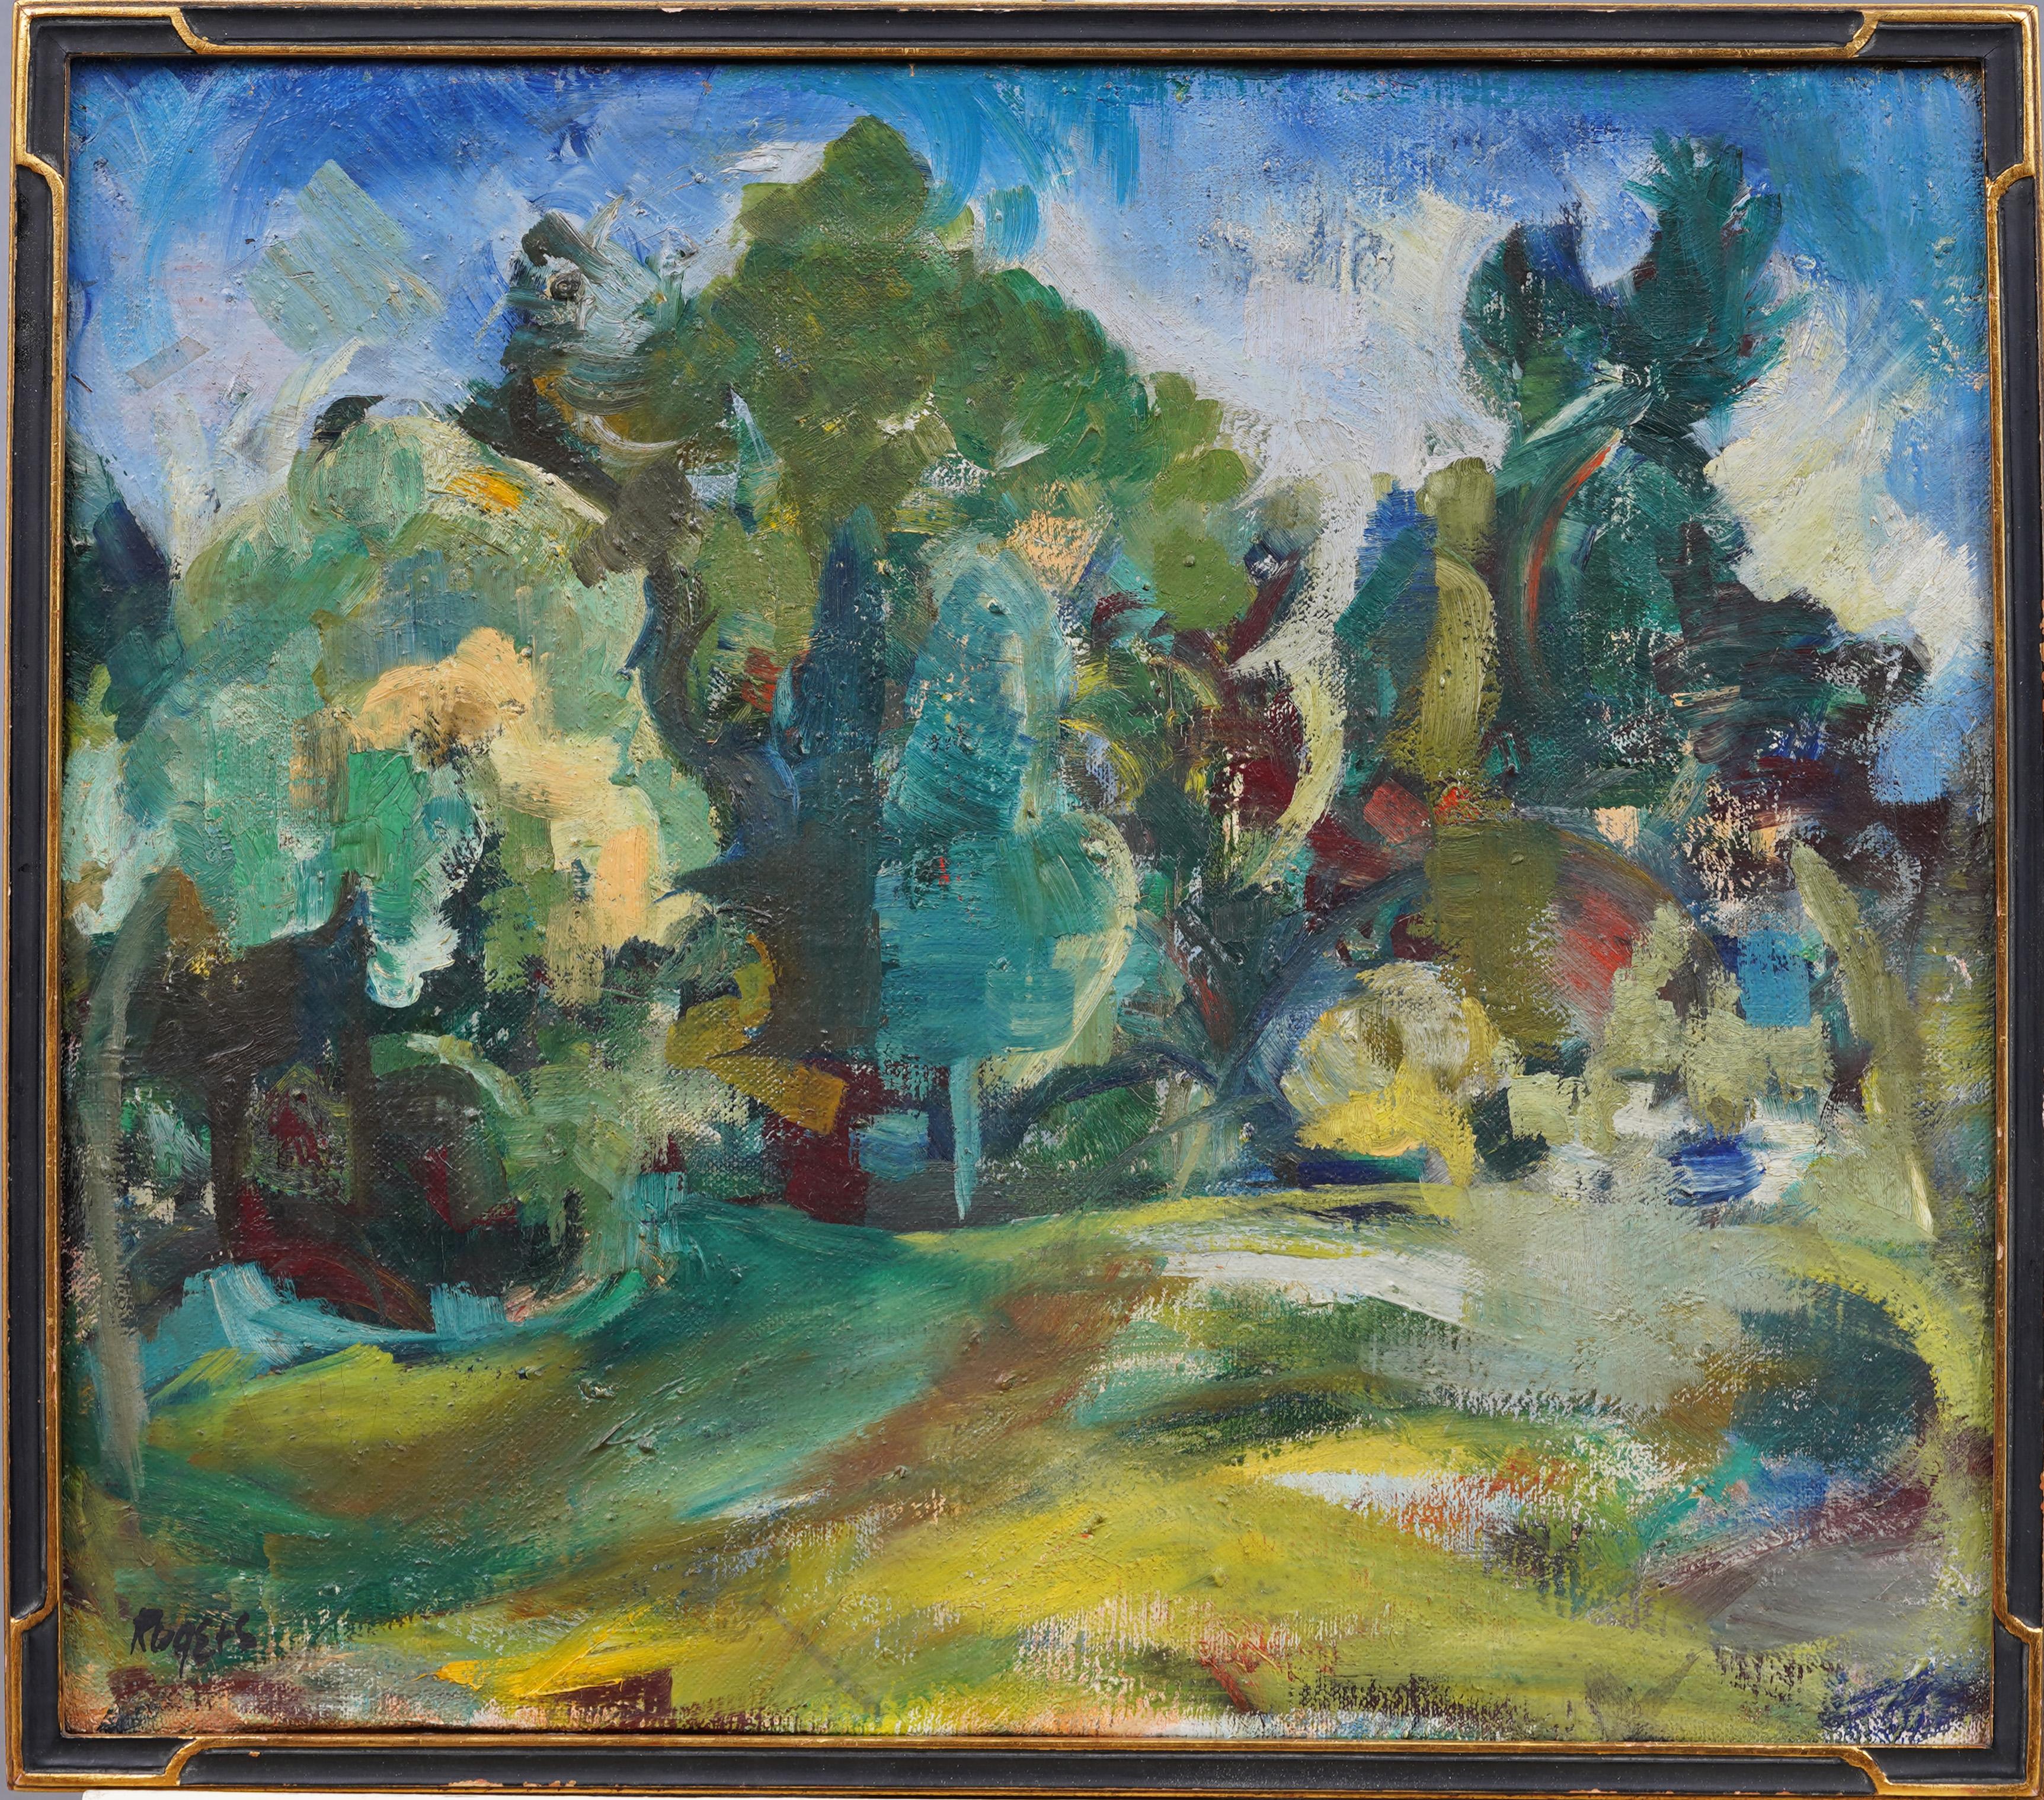 Rita Rogers Landscape Painting - Antique American Woman Artist Modernist Landscape Framed Signed Oil Painting